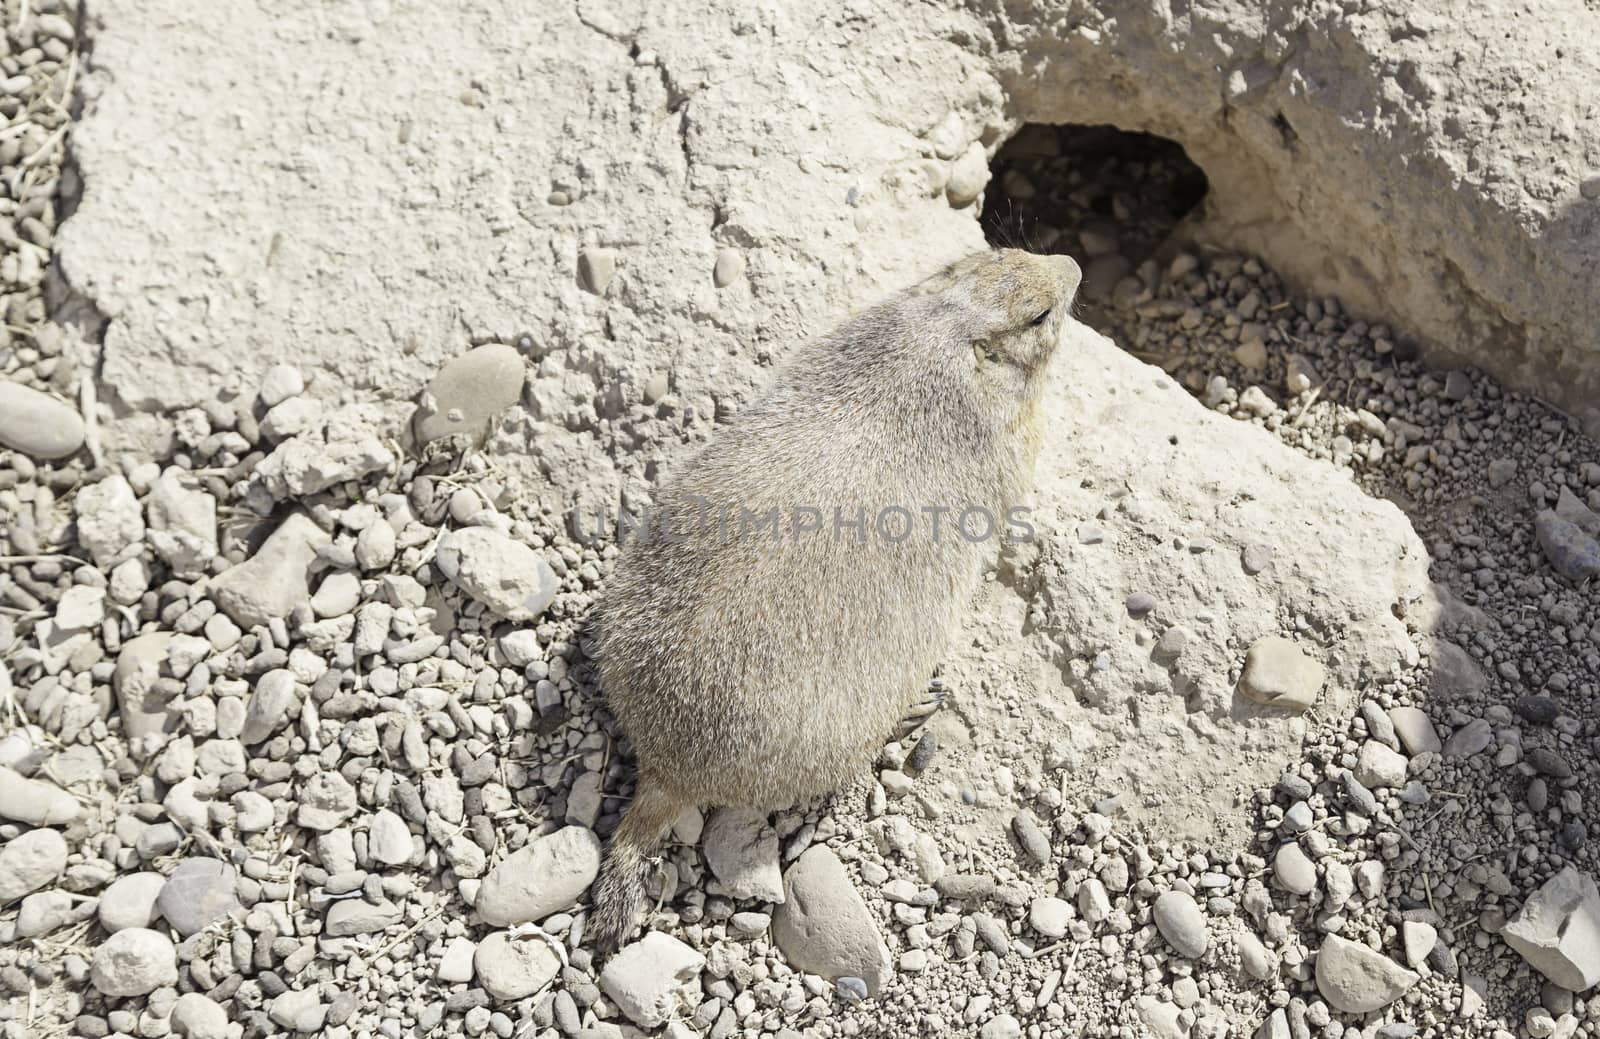 Prairie dog in his burrow, detail cuatividad a wild animal, zoo and animal exposure